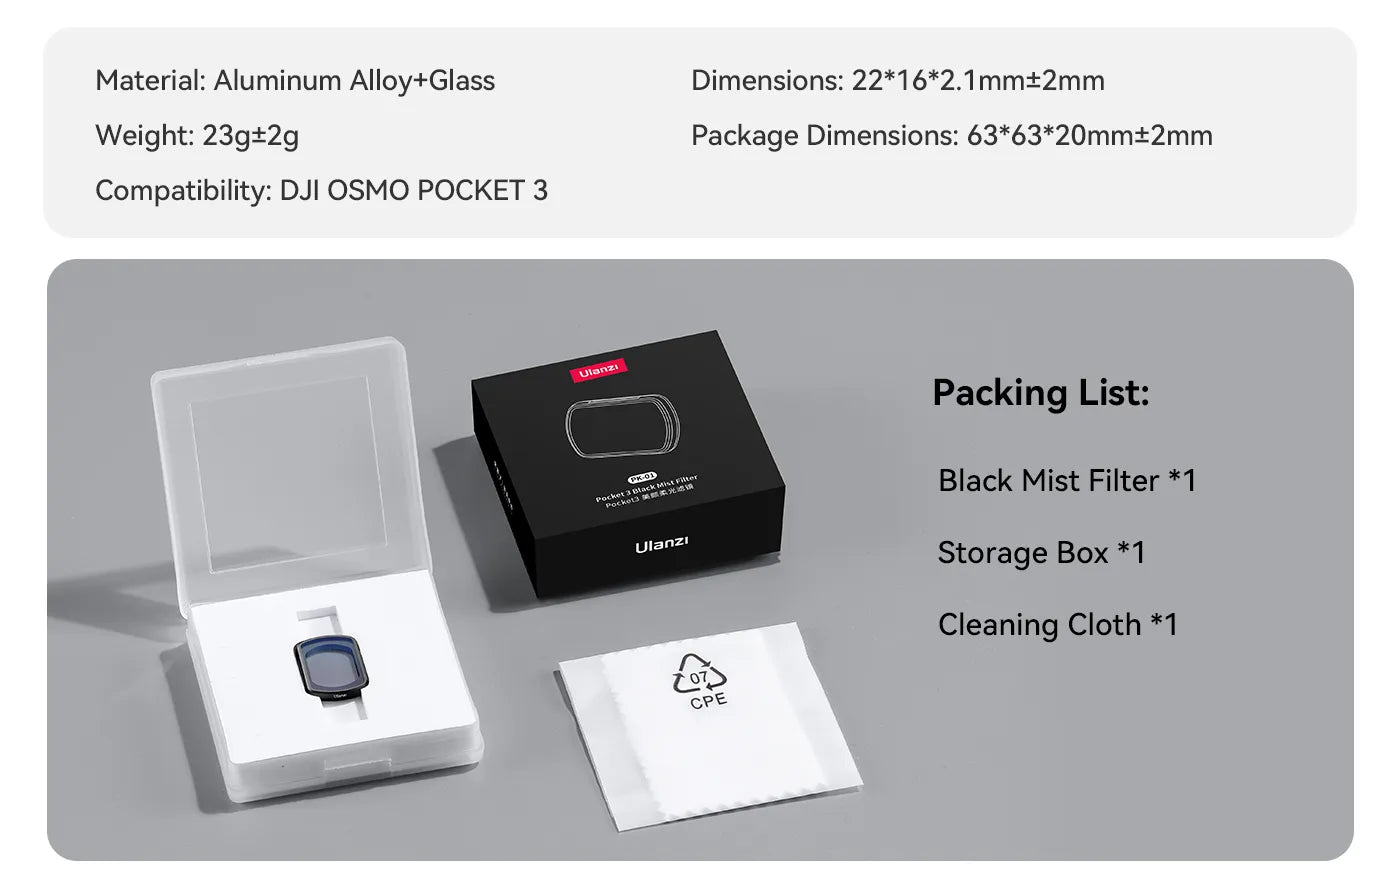 Ulanzi PK-01 Black Mist Filter for DJI Osmo Pocket 3